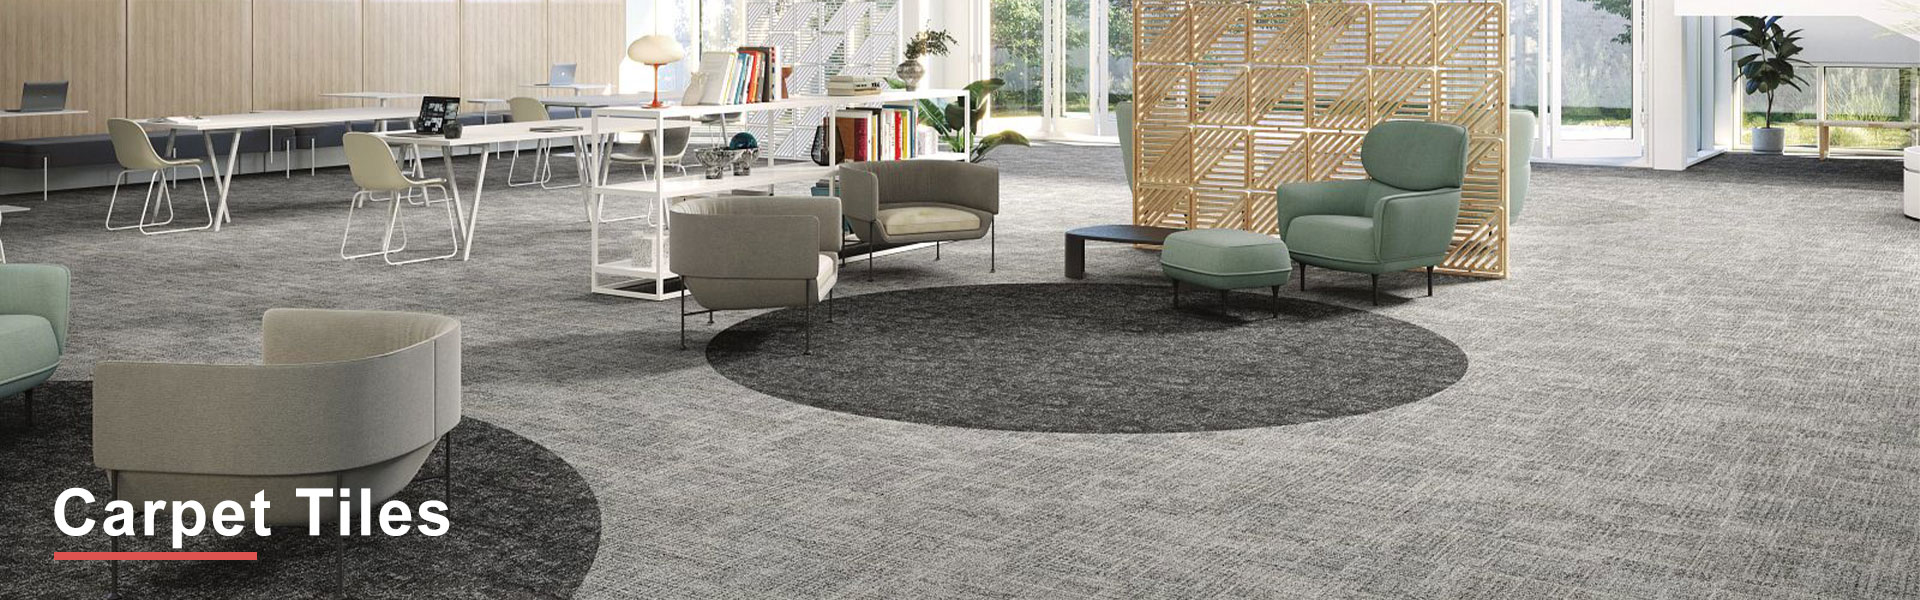 Carpet Tiles - Get Floors Online